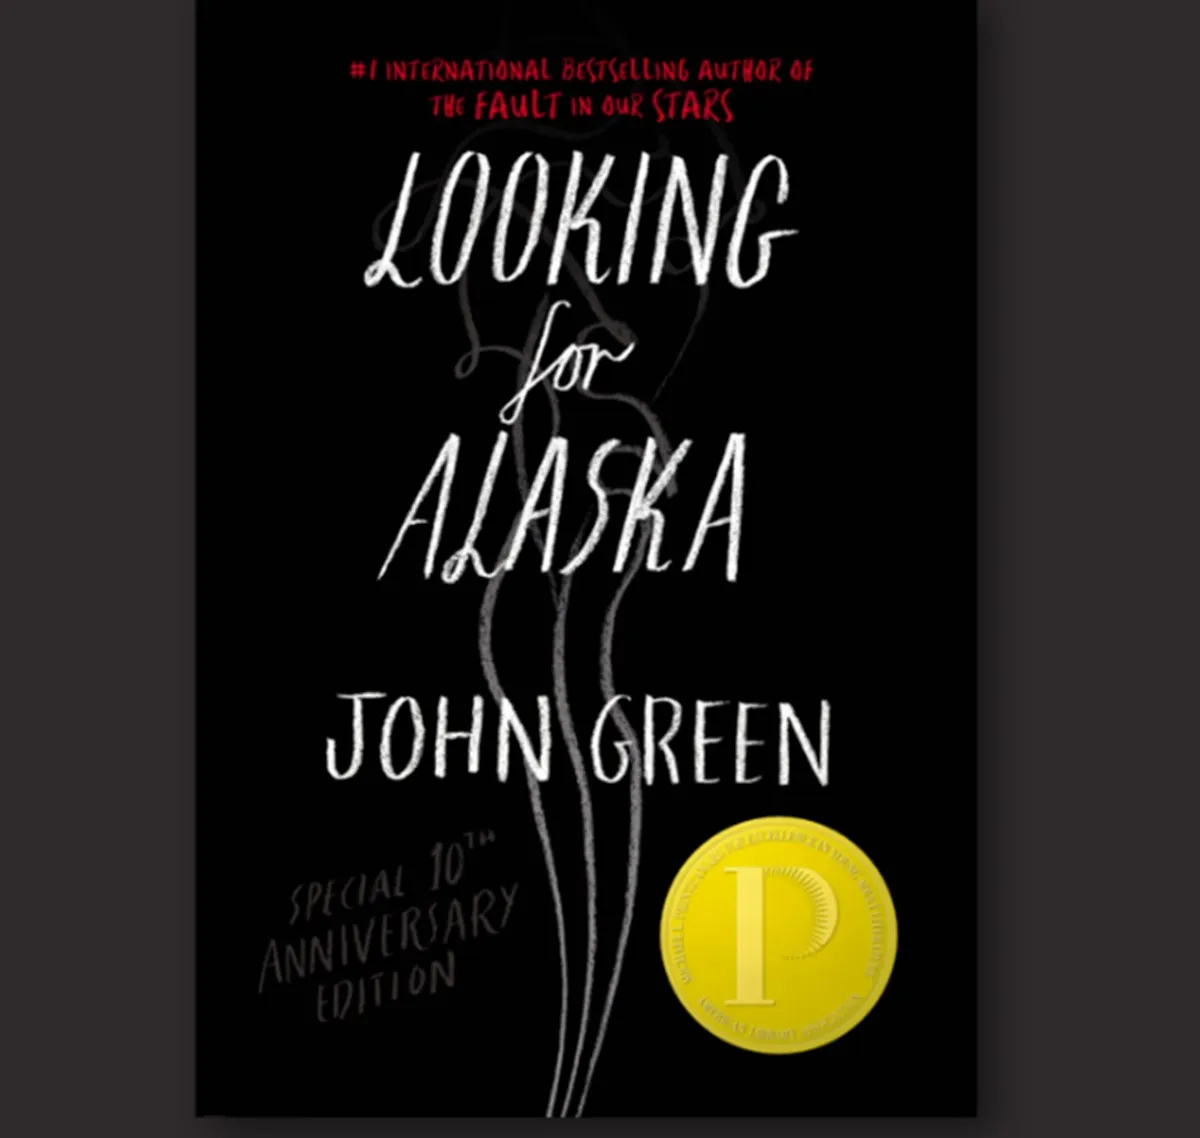 Looking For Alaska novel by John Green